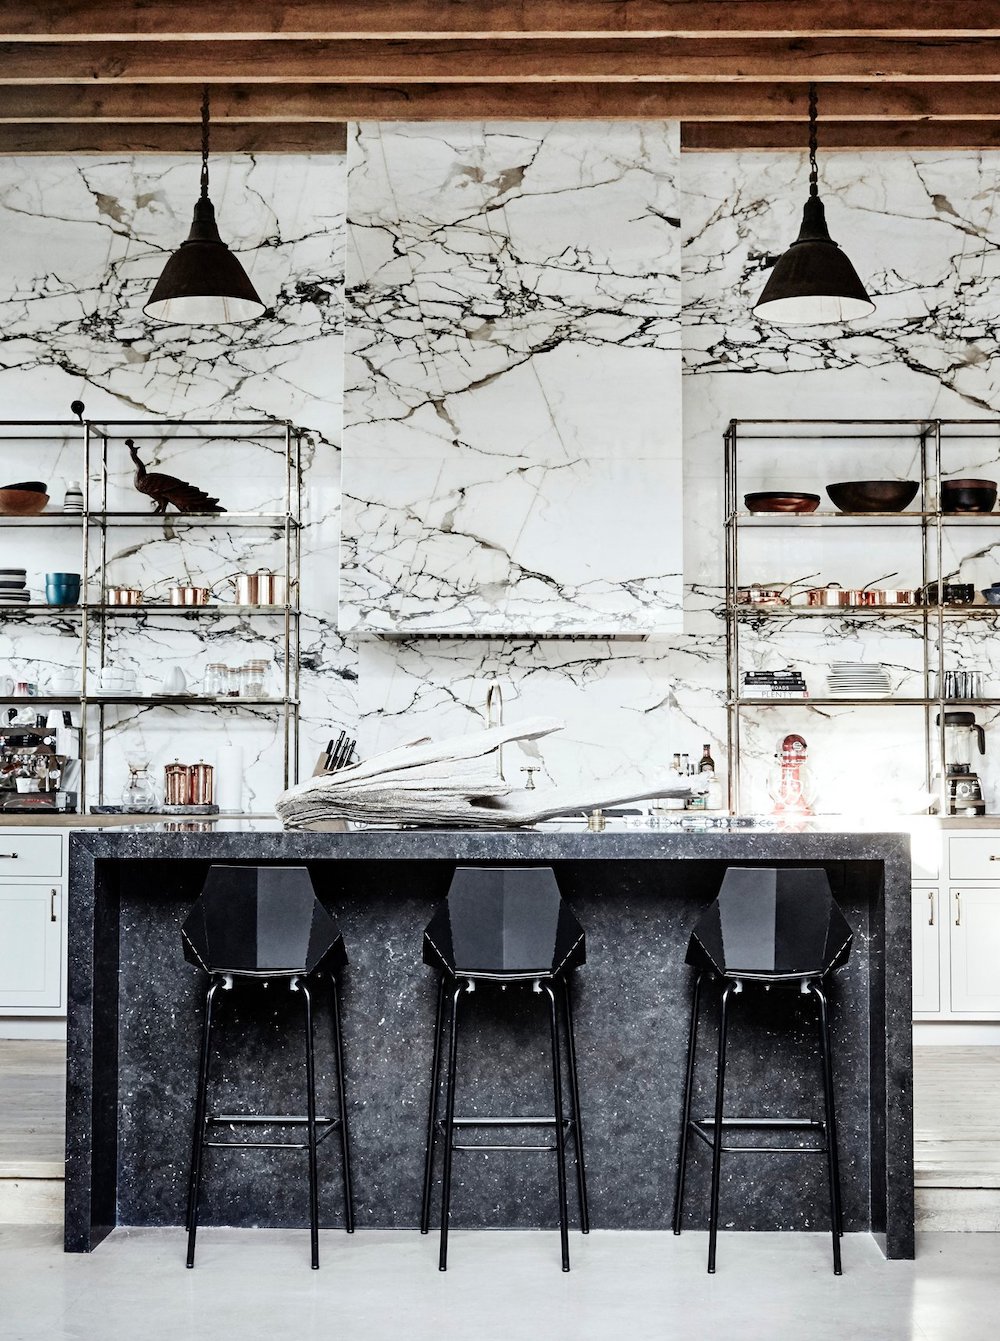 denise vasi's marble filled kitchen 